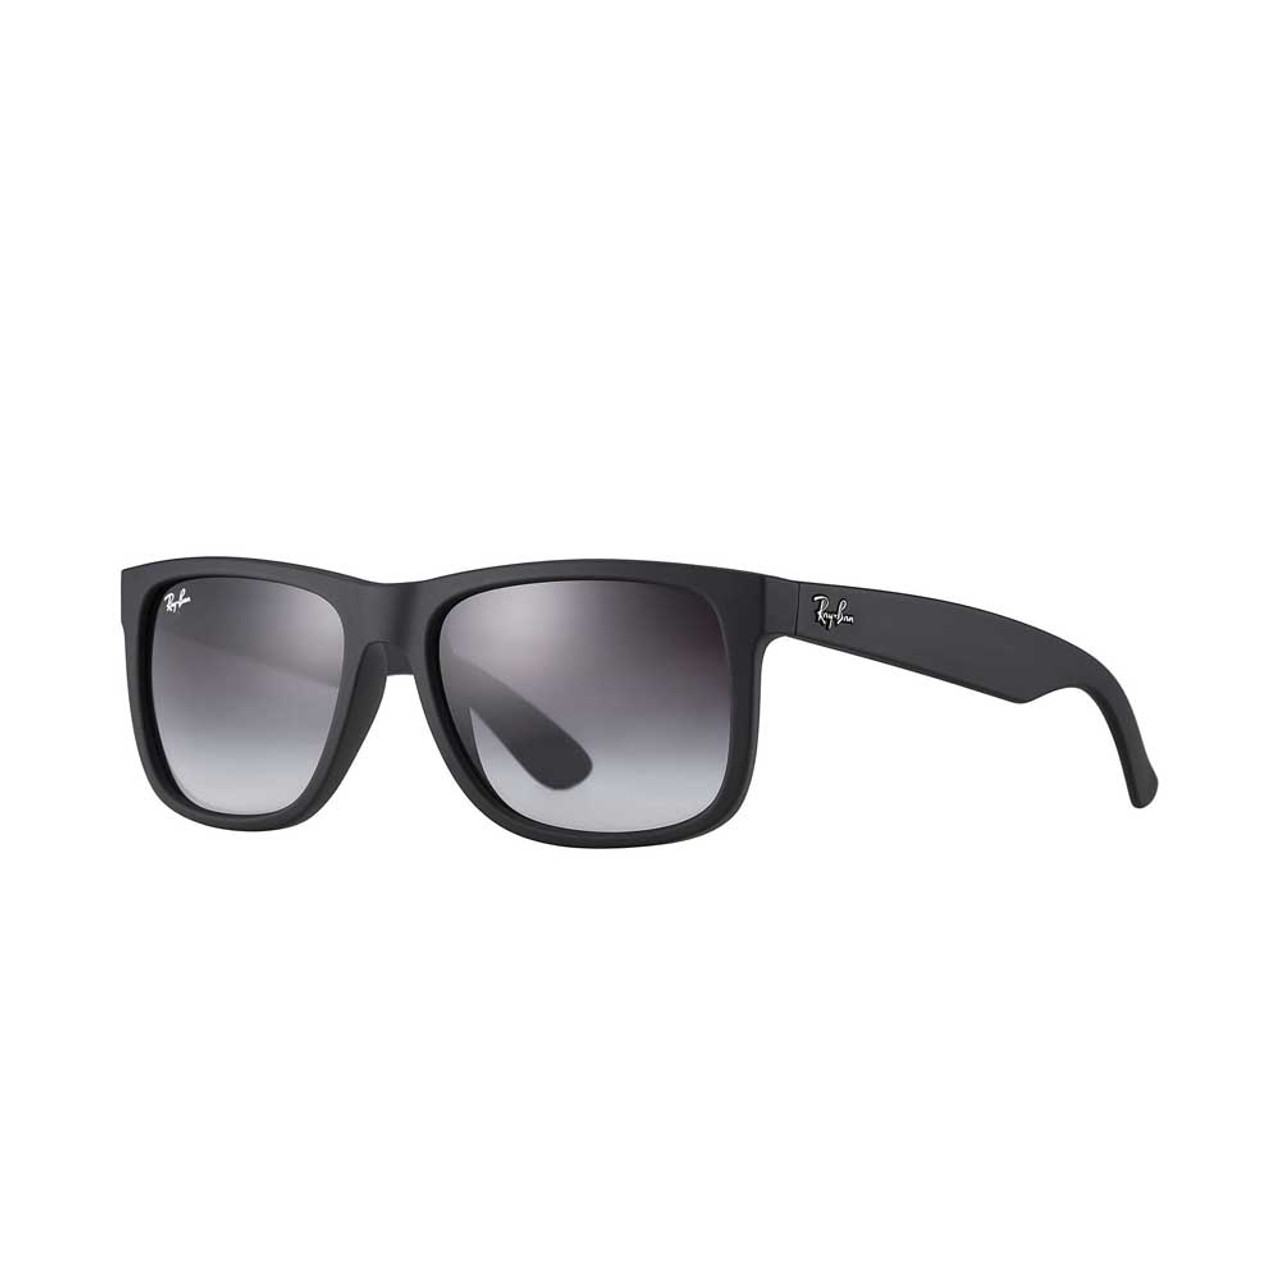 Ray-Ban Ray-Ban Justin Classic Sunglasses - Black/Grey Gradient $ 155 |  TYLER'S